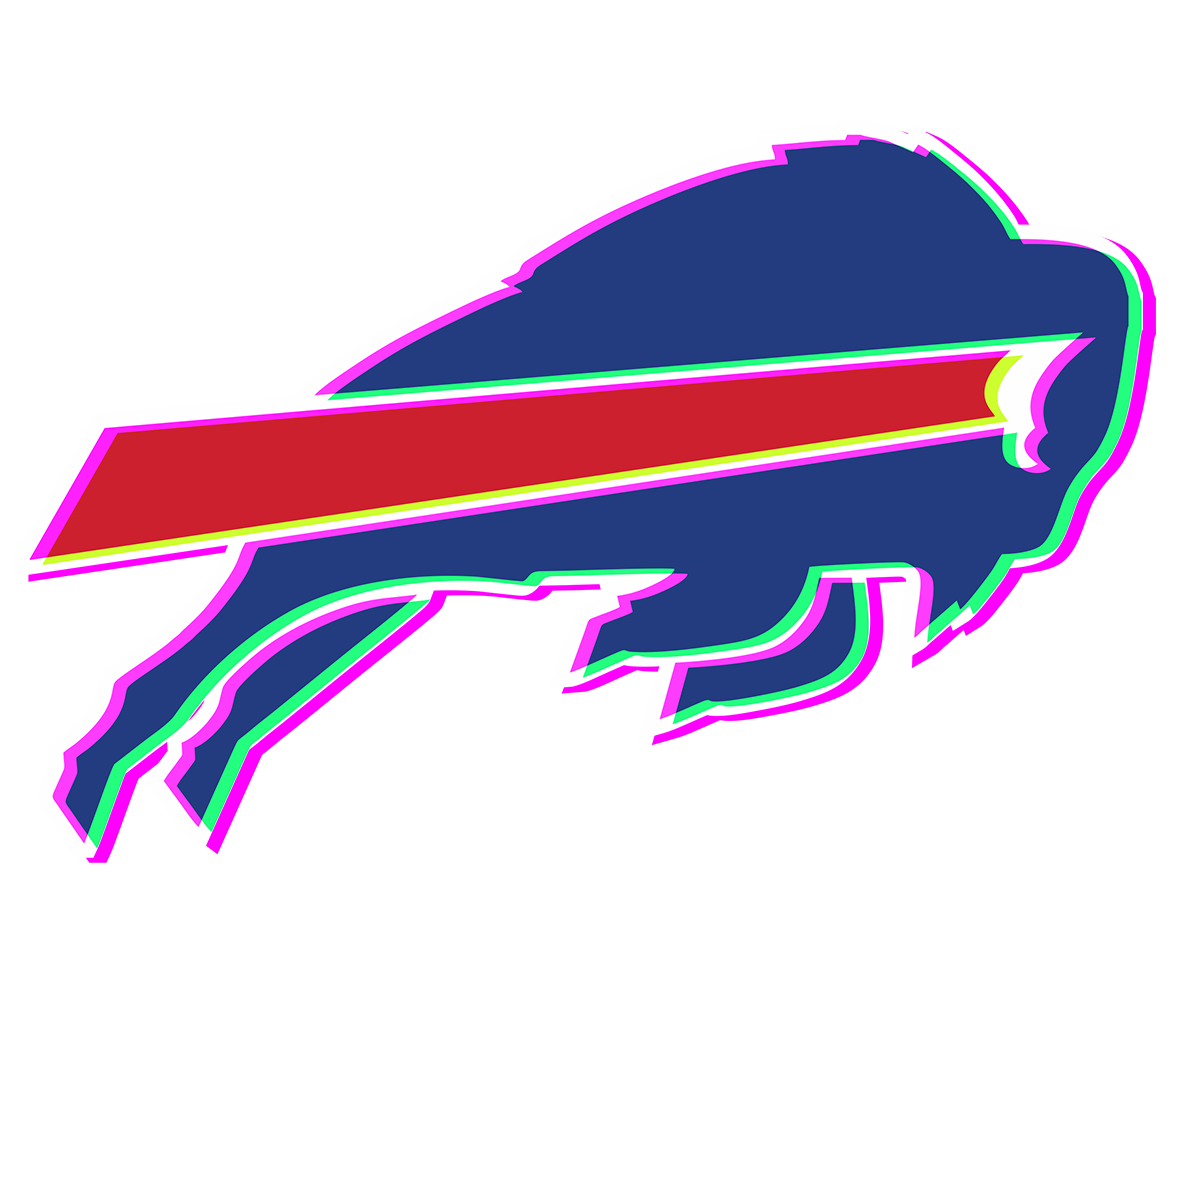 Bills Logo PNG